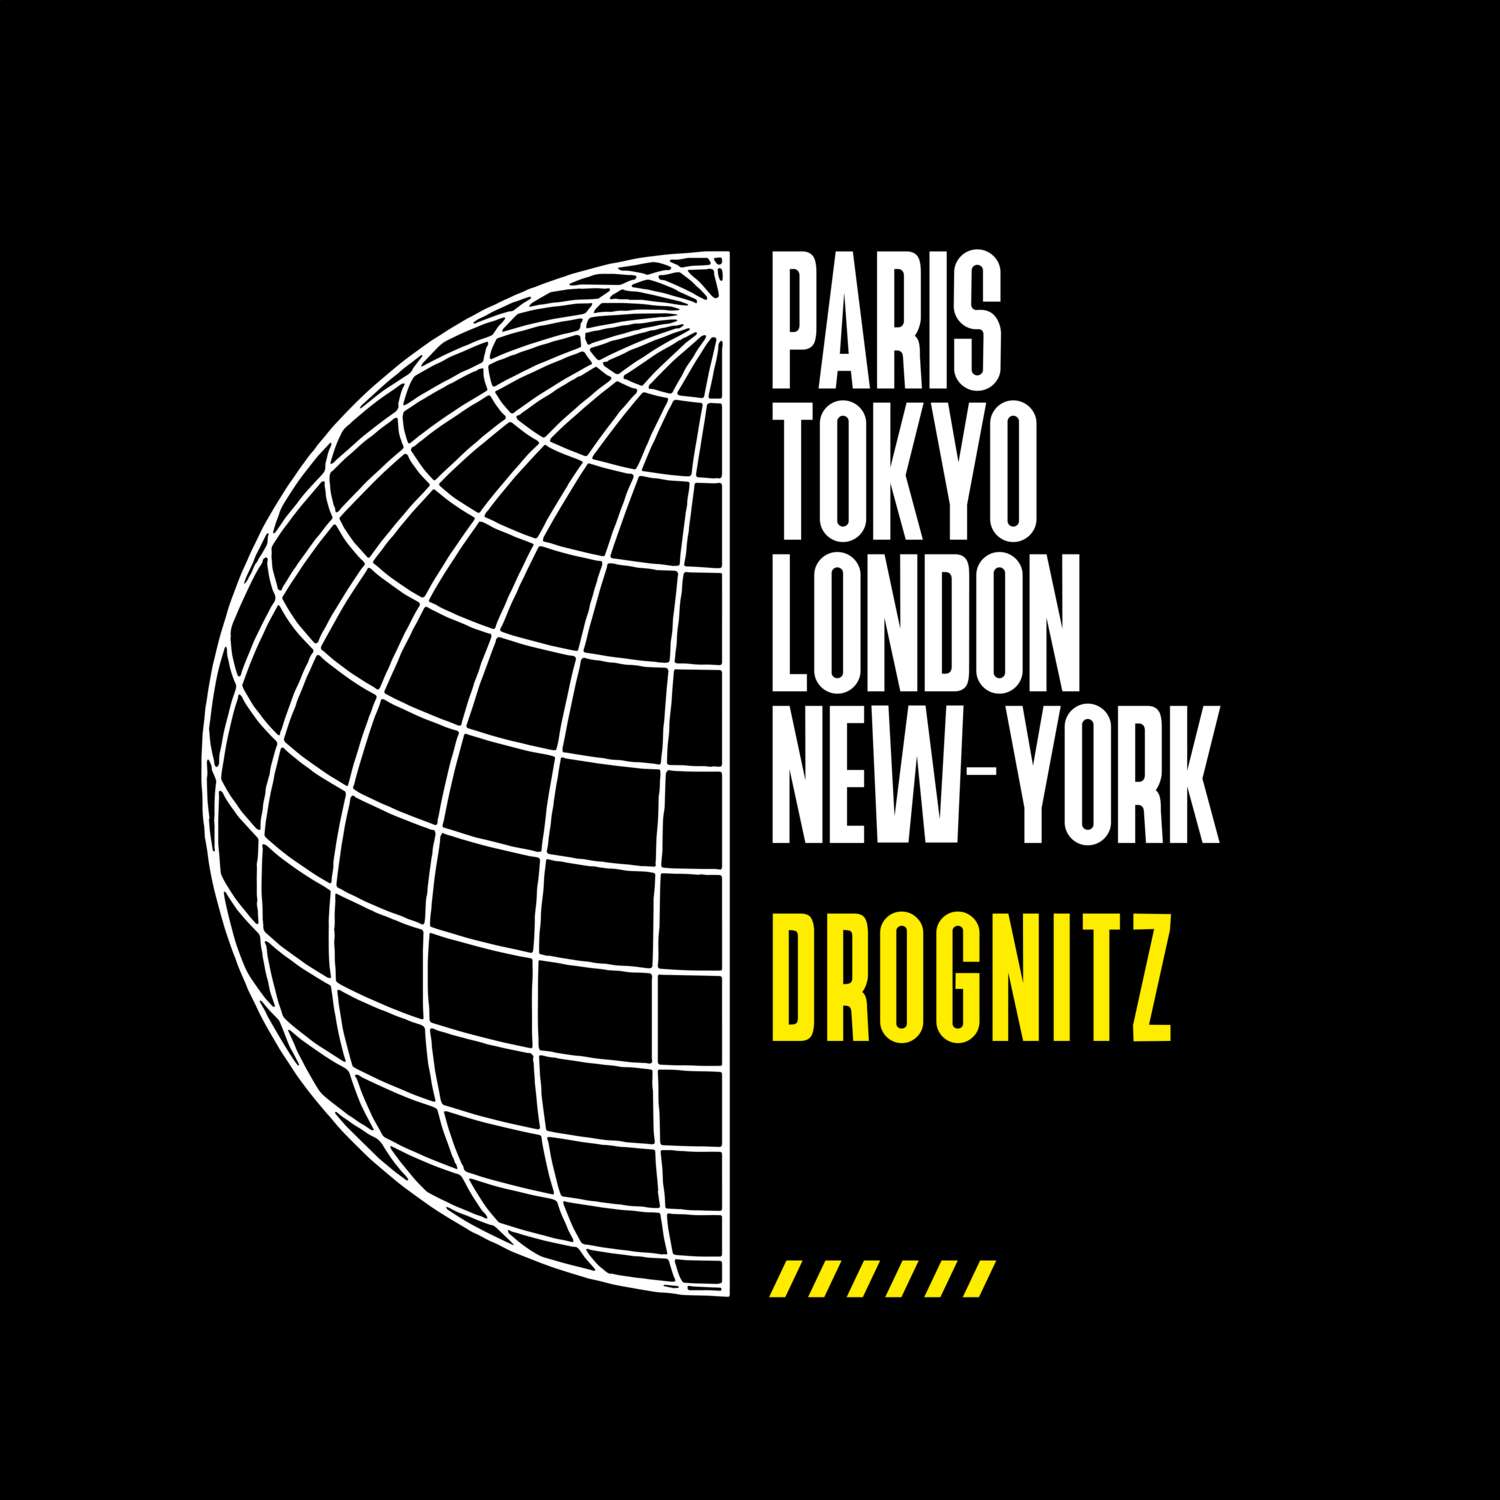 Drognitz T-Shirt »Paris Tokyo London«